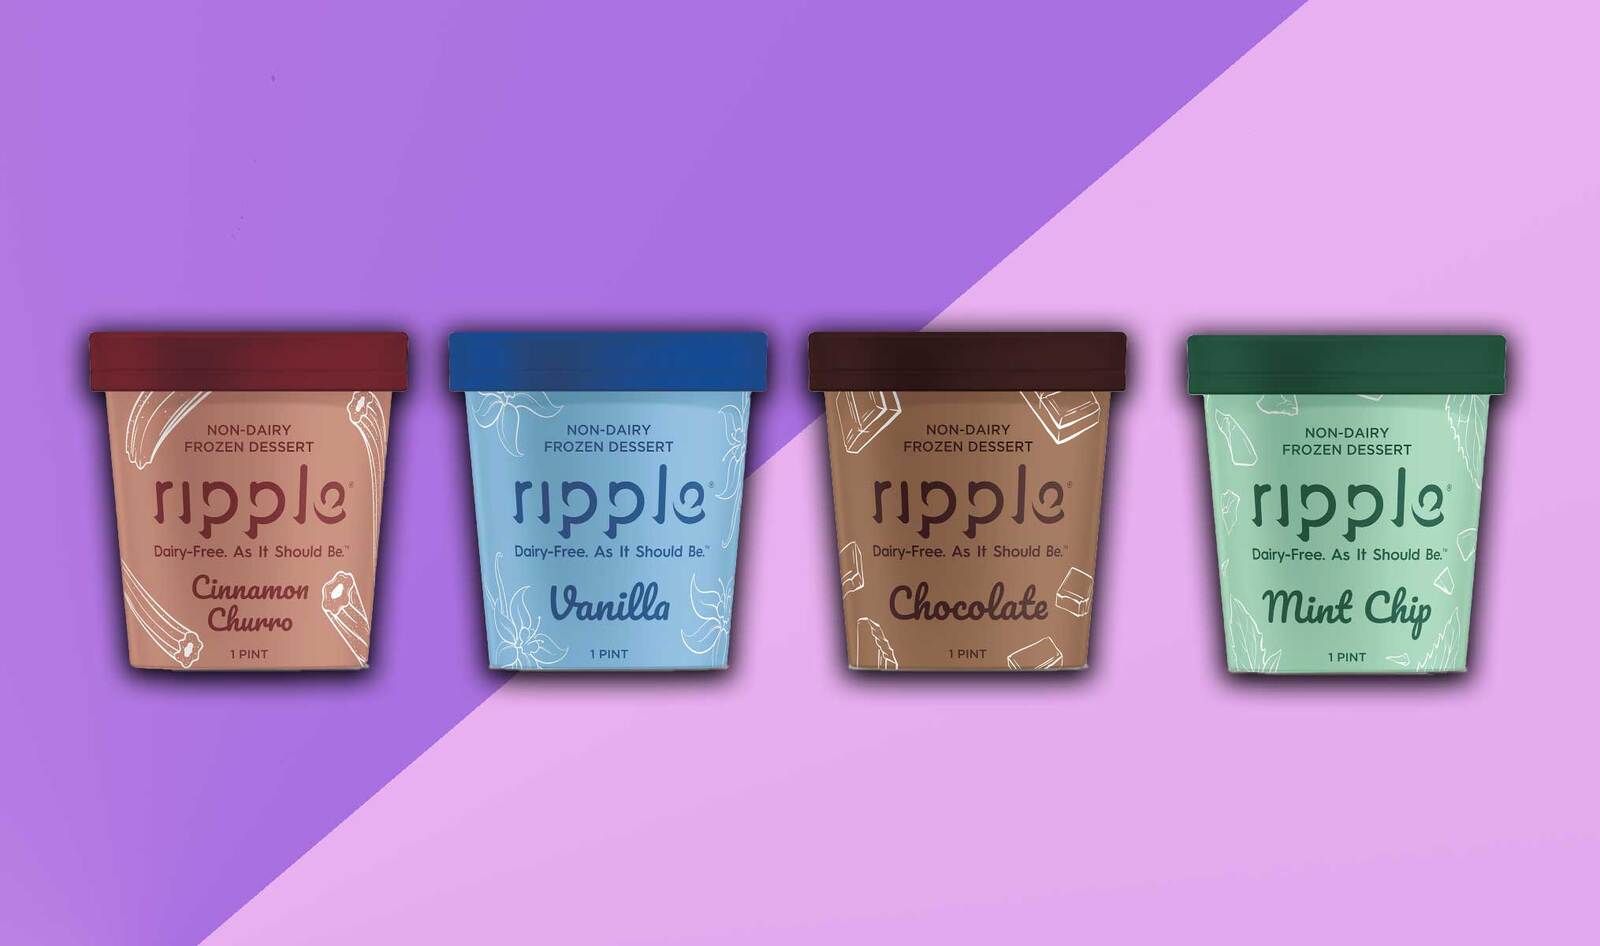 California Brand Ripple Creates Vegan Ice Cream Line from Peas